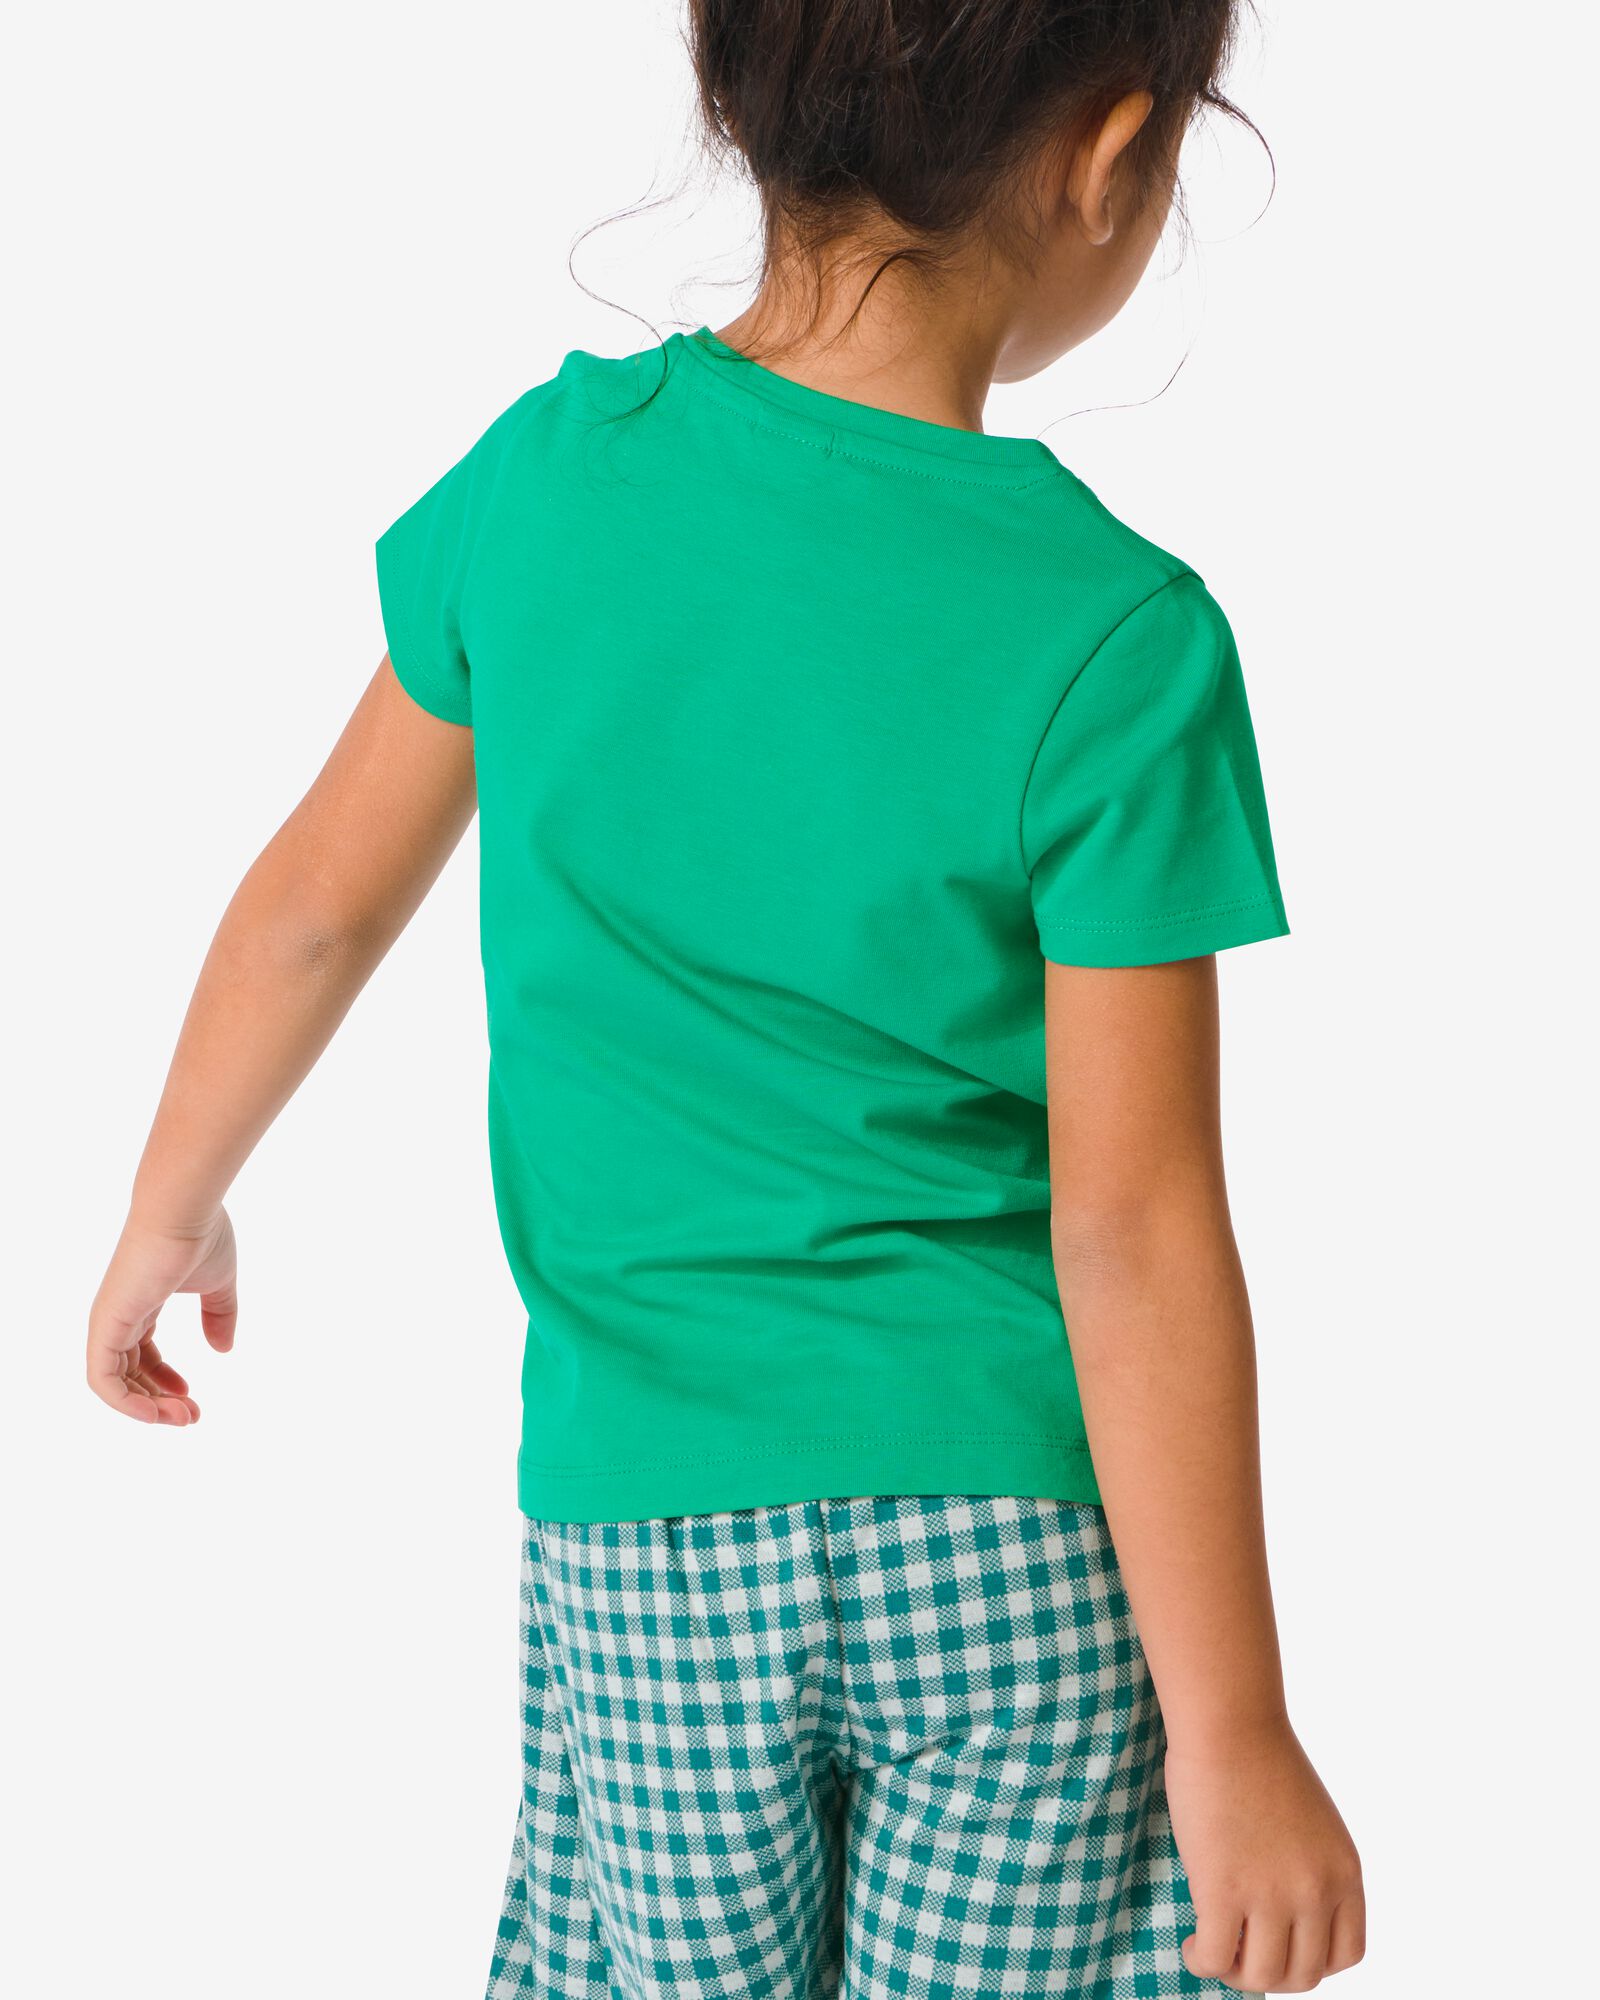 kinder t-shirt biologisch katoen groen 86/92 - 30832360 - HEMA